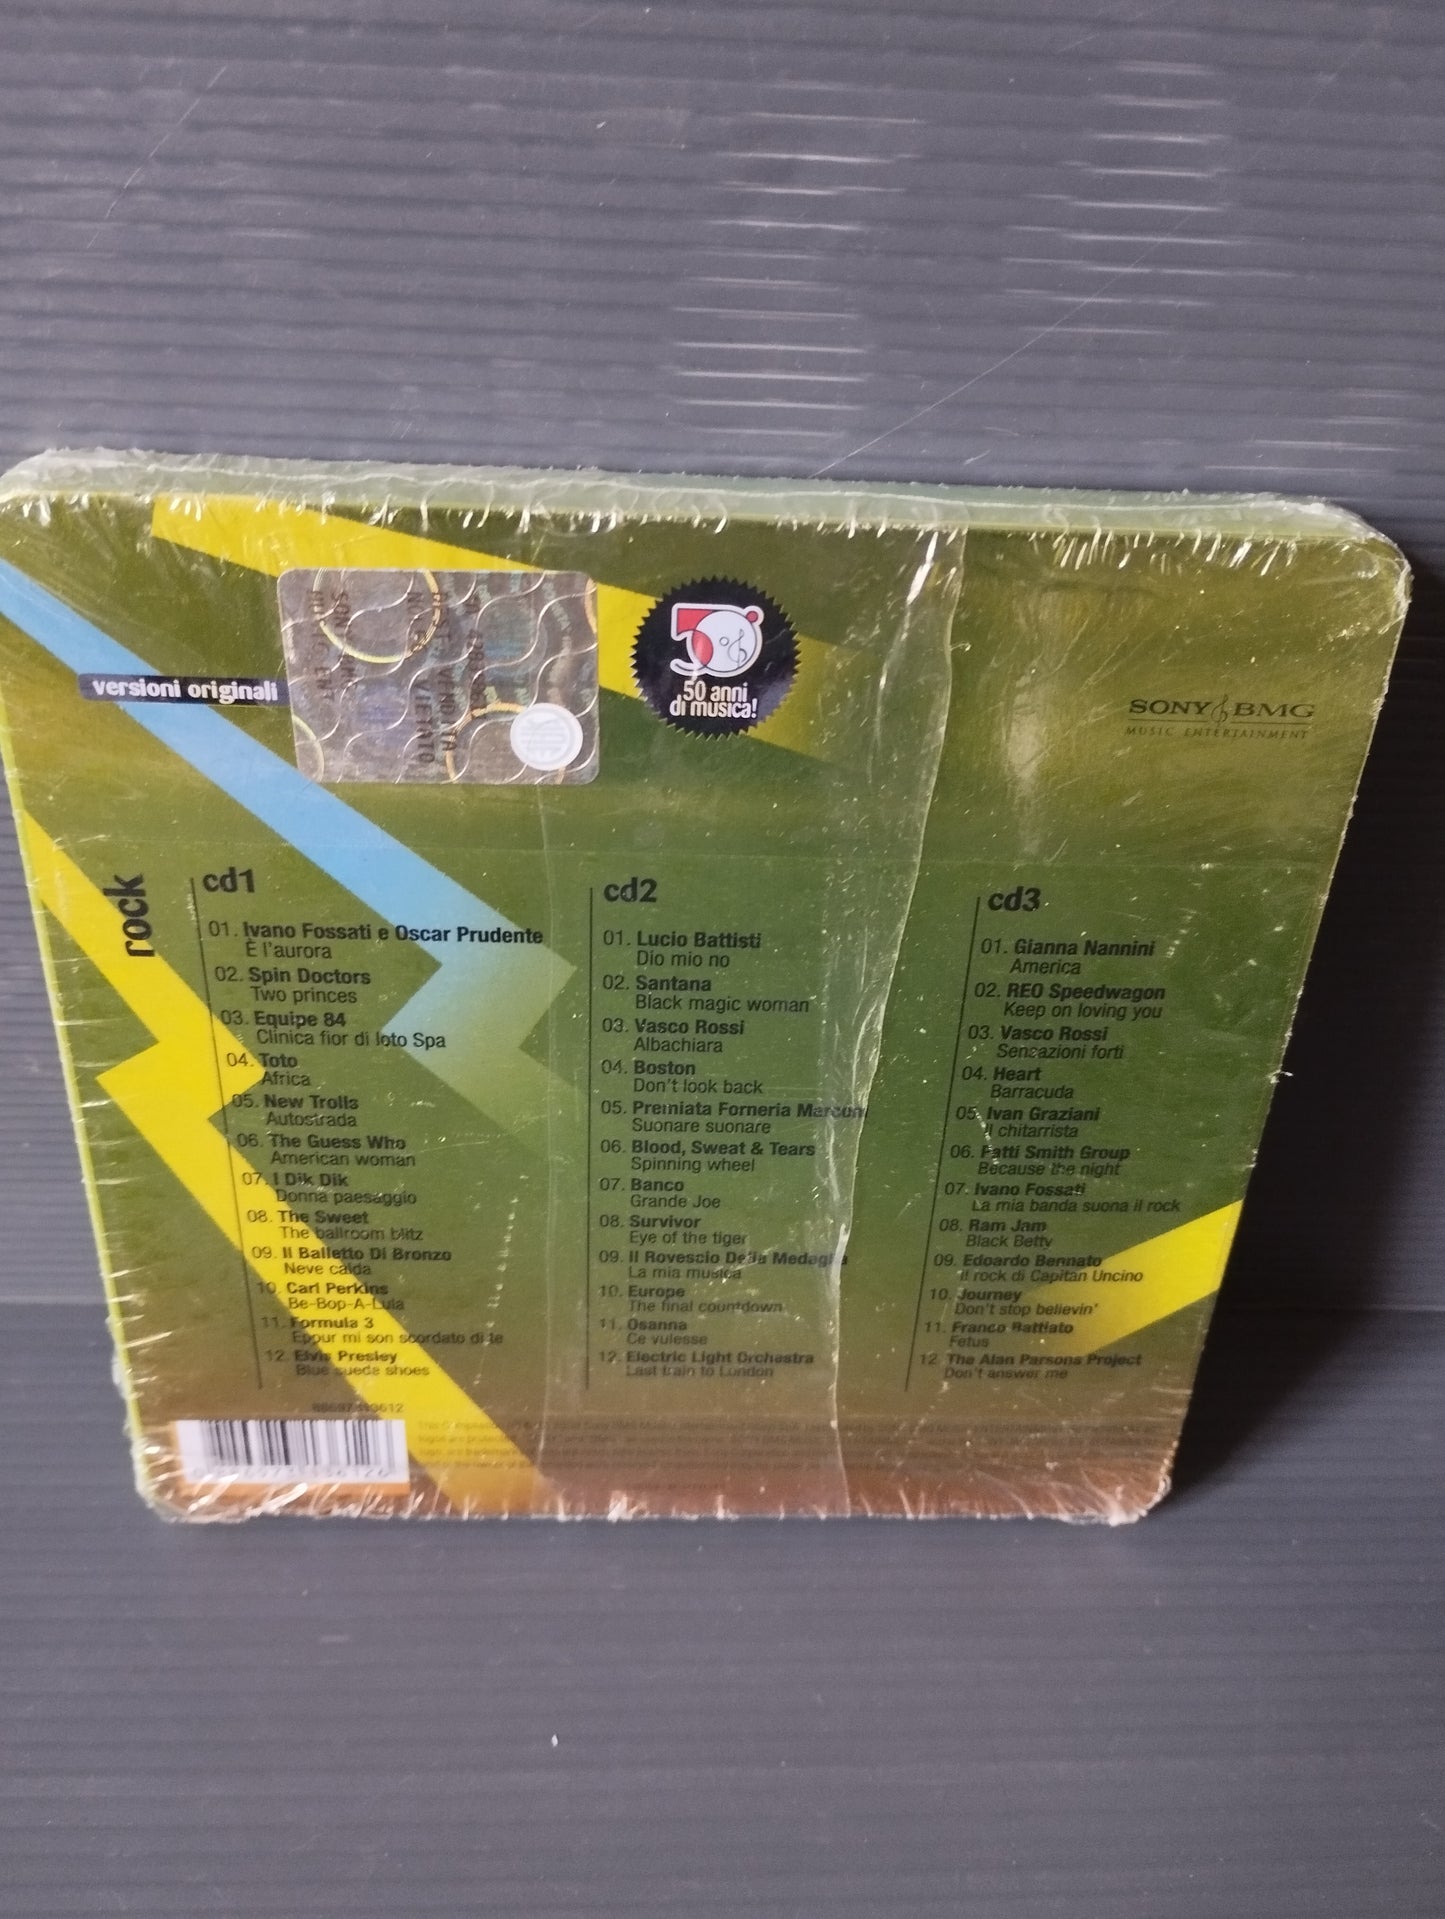 50 Years of Rock Music" 3 CD box set